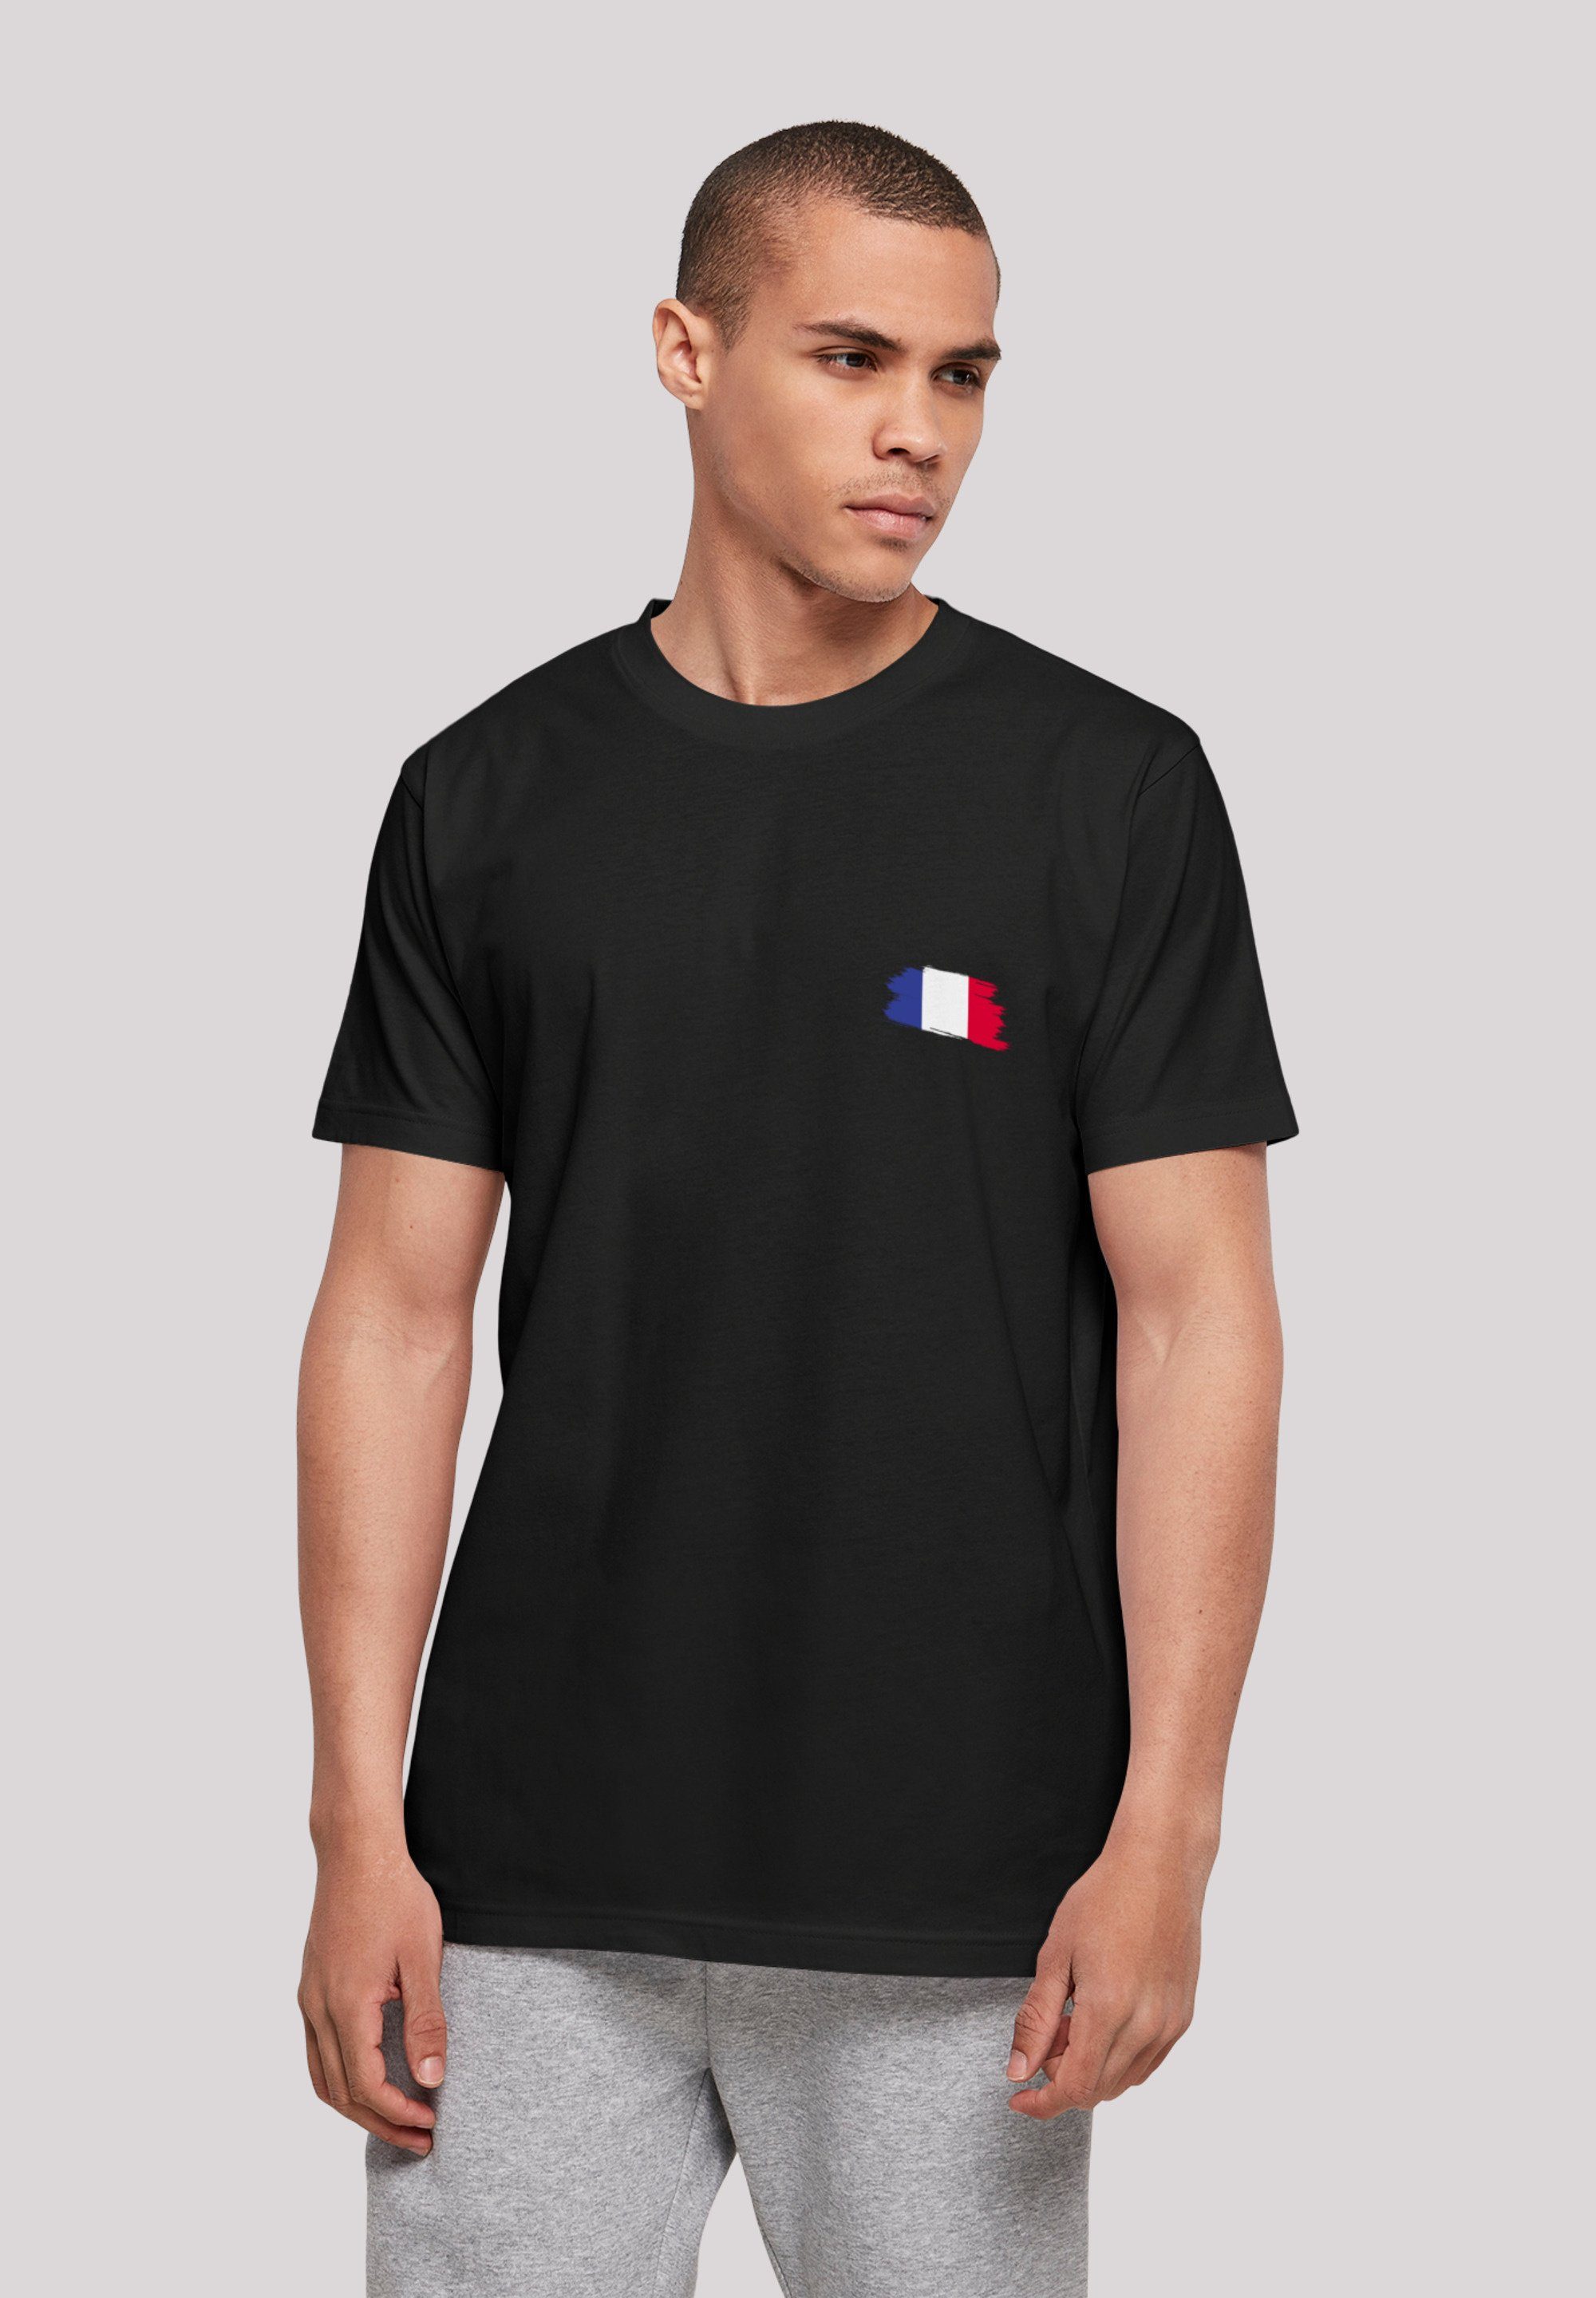 F4NT4STIC T-Shirt Flagge Print Frankreich France schwarz